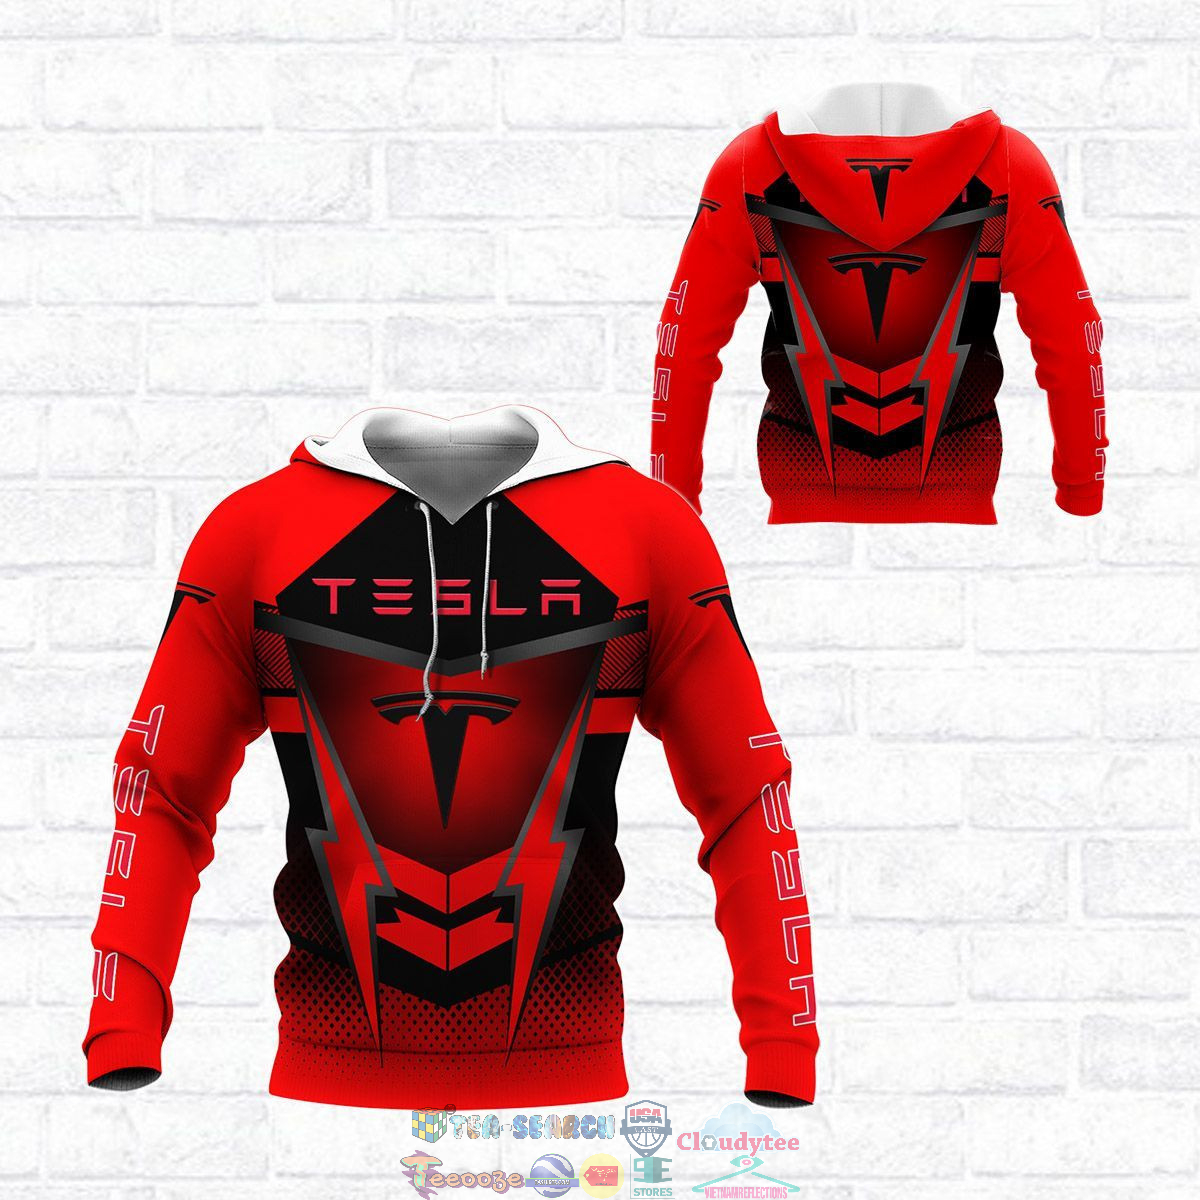 Tesla Red ver 2 3D hoodie and t-shirt- Saleoff